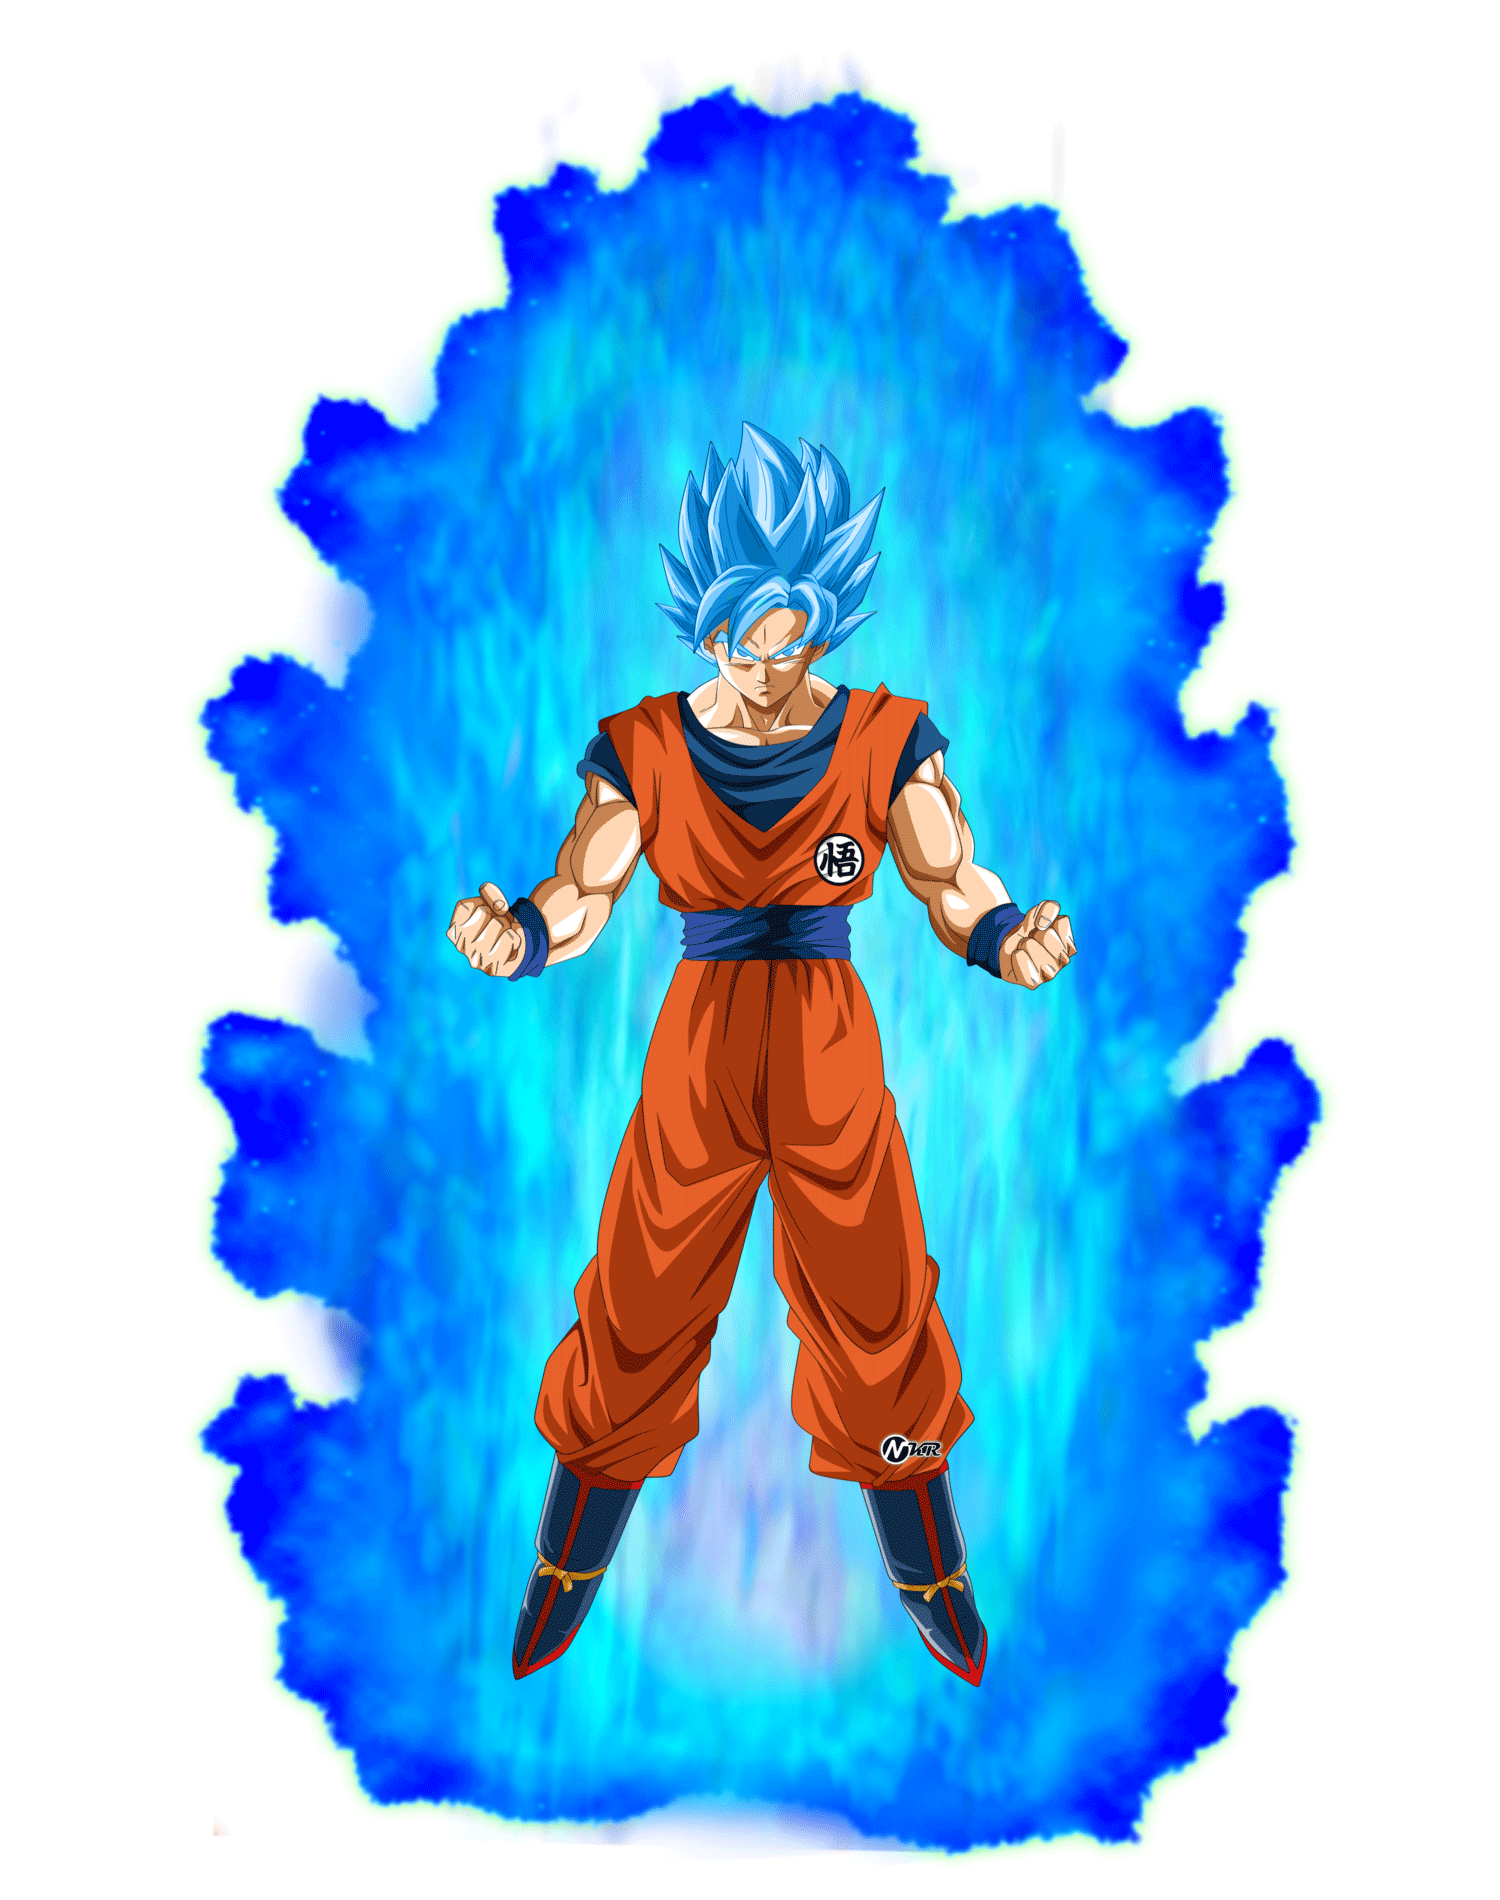 DBS) Goku SSJ blue Evolution by GokuLSSlegendary on DeviantArt